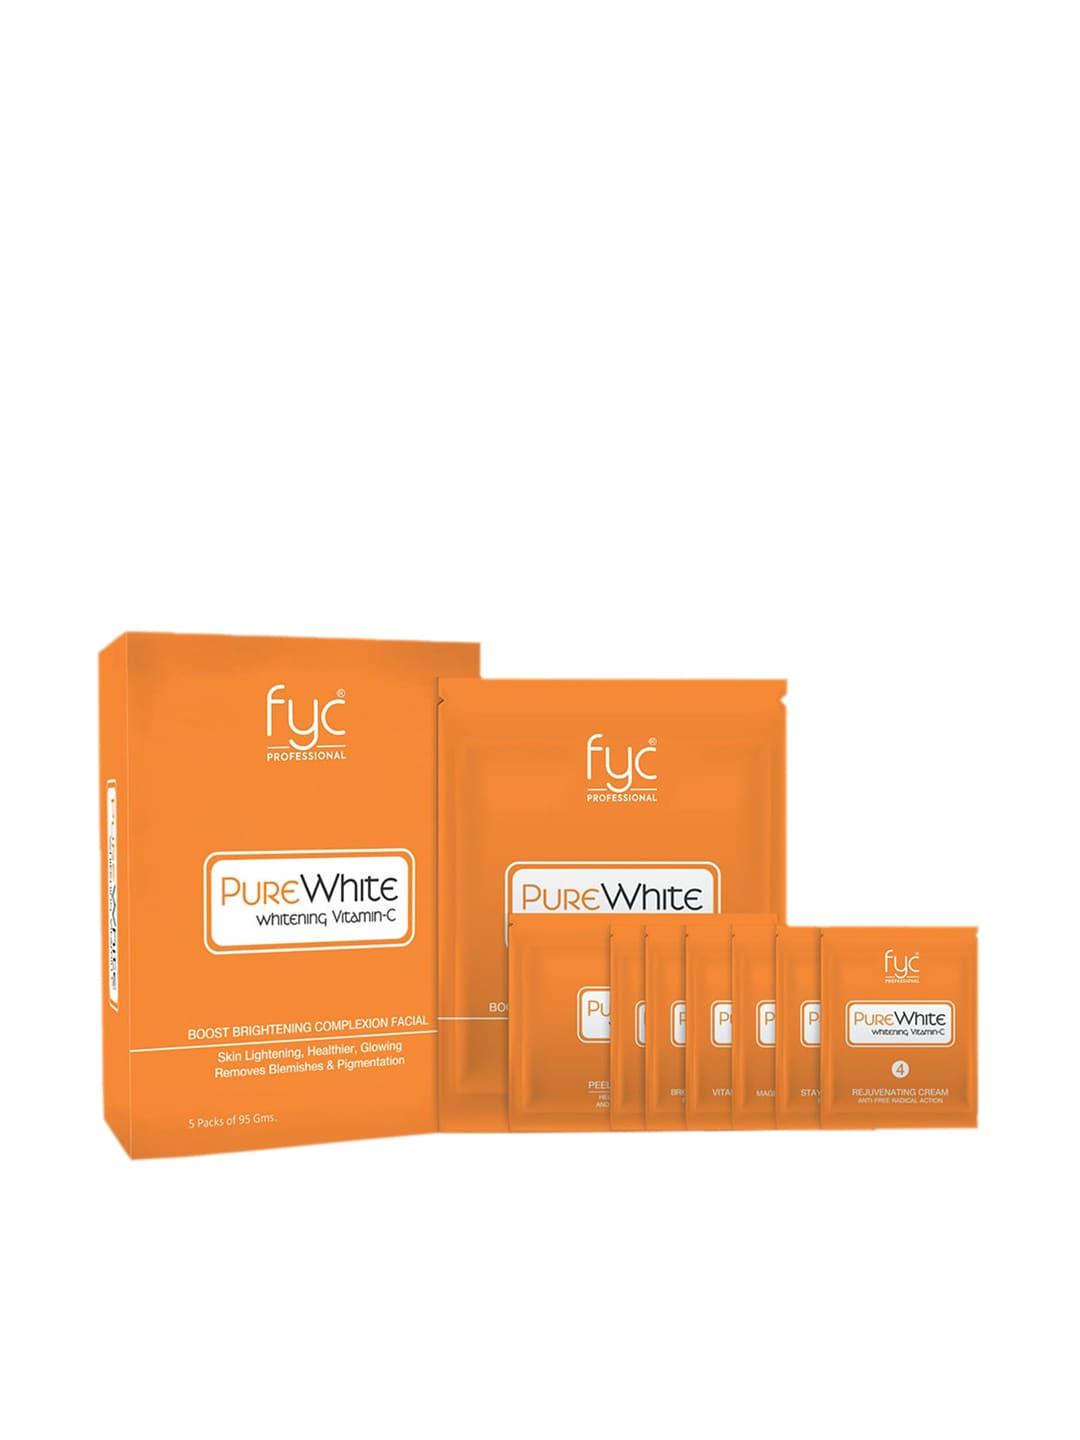 fyc professtional pure white whitening vitamin c facial kit - 95 g